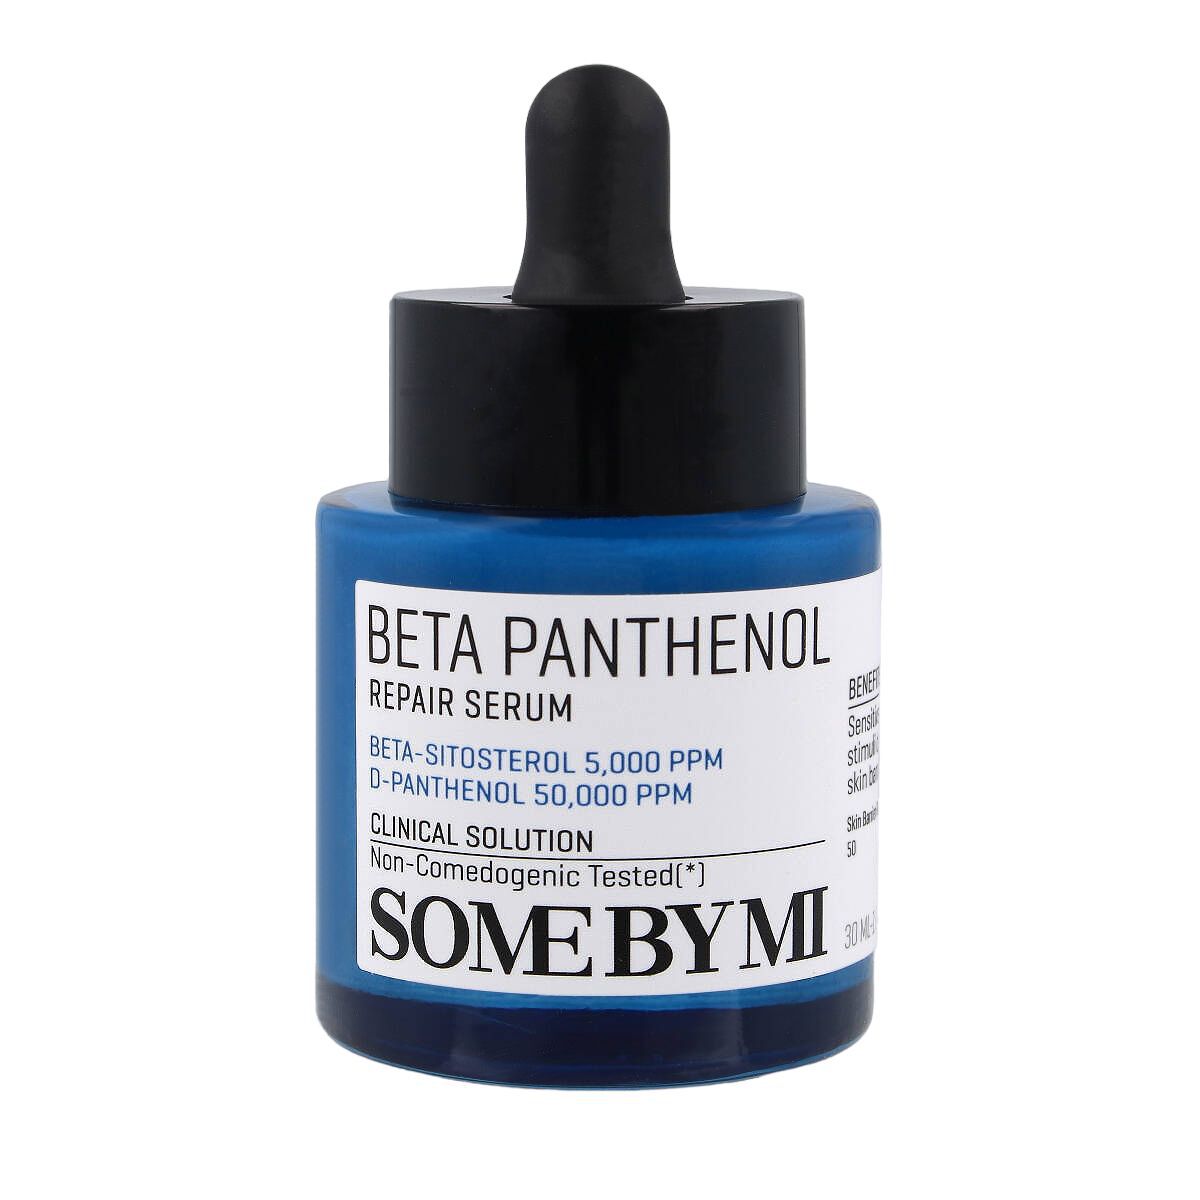 Восстанавливающая сыворотка для лица Some By Mi Beta Panthenol, 30 мл rootree сыворотка восстанавливающая и выравнивающая цвет лица mobitherapy repair serum